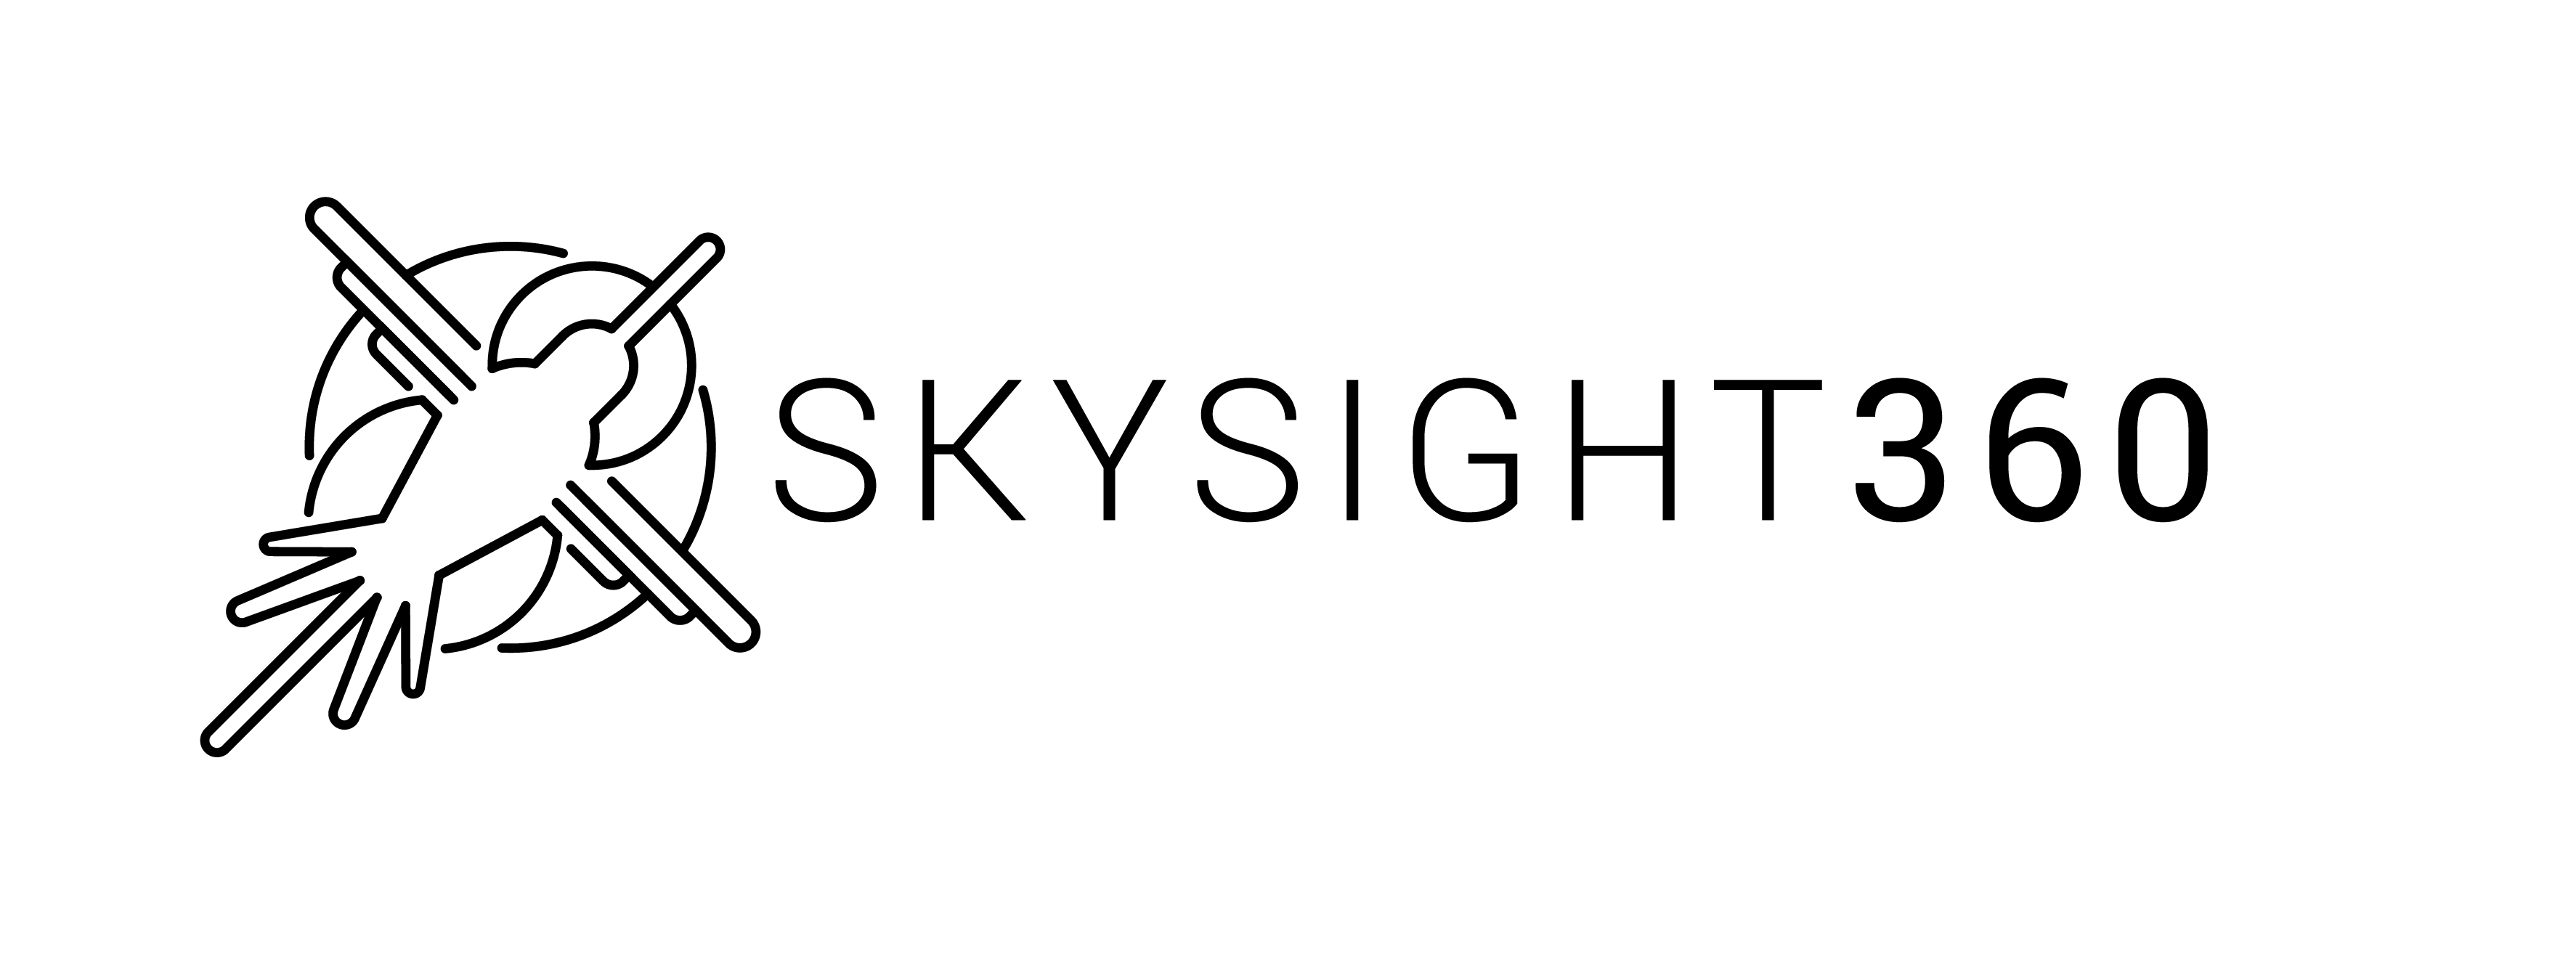 SkySight360 Logo